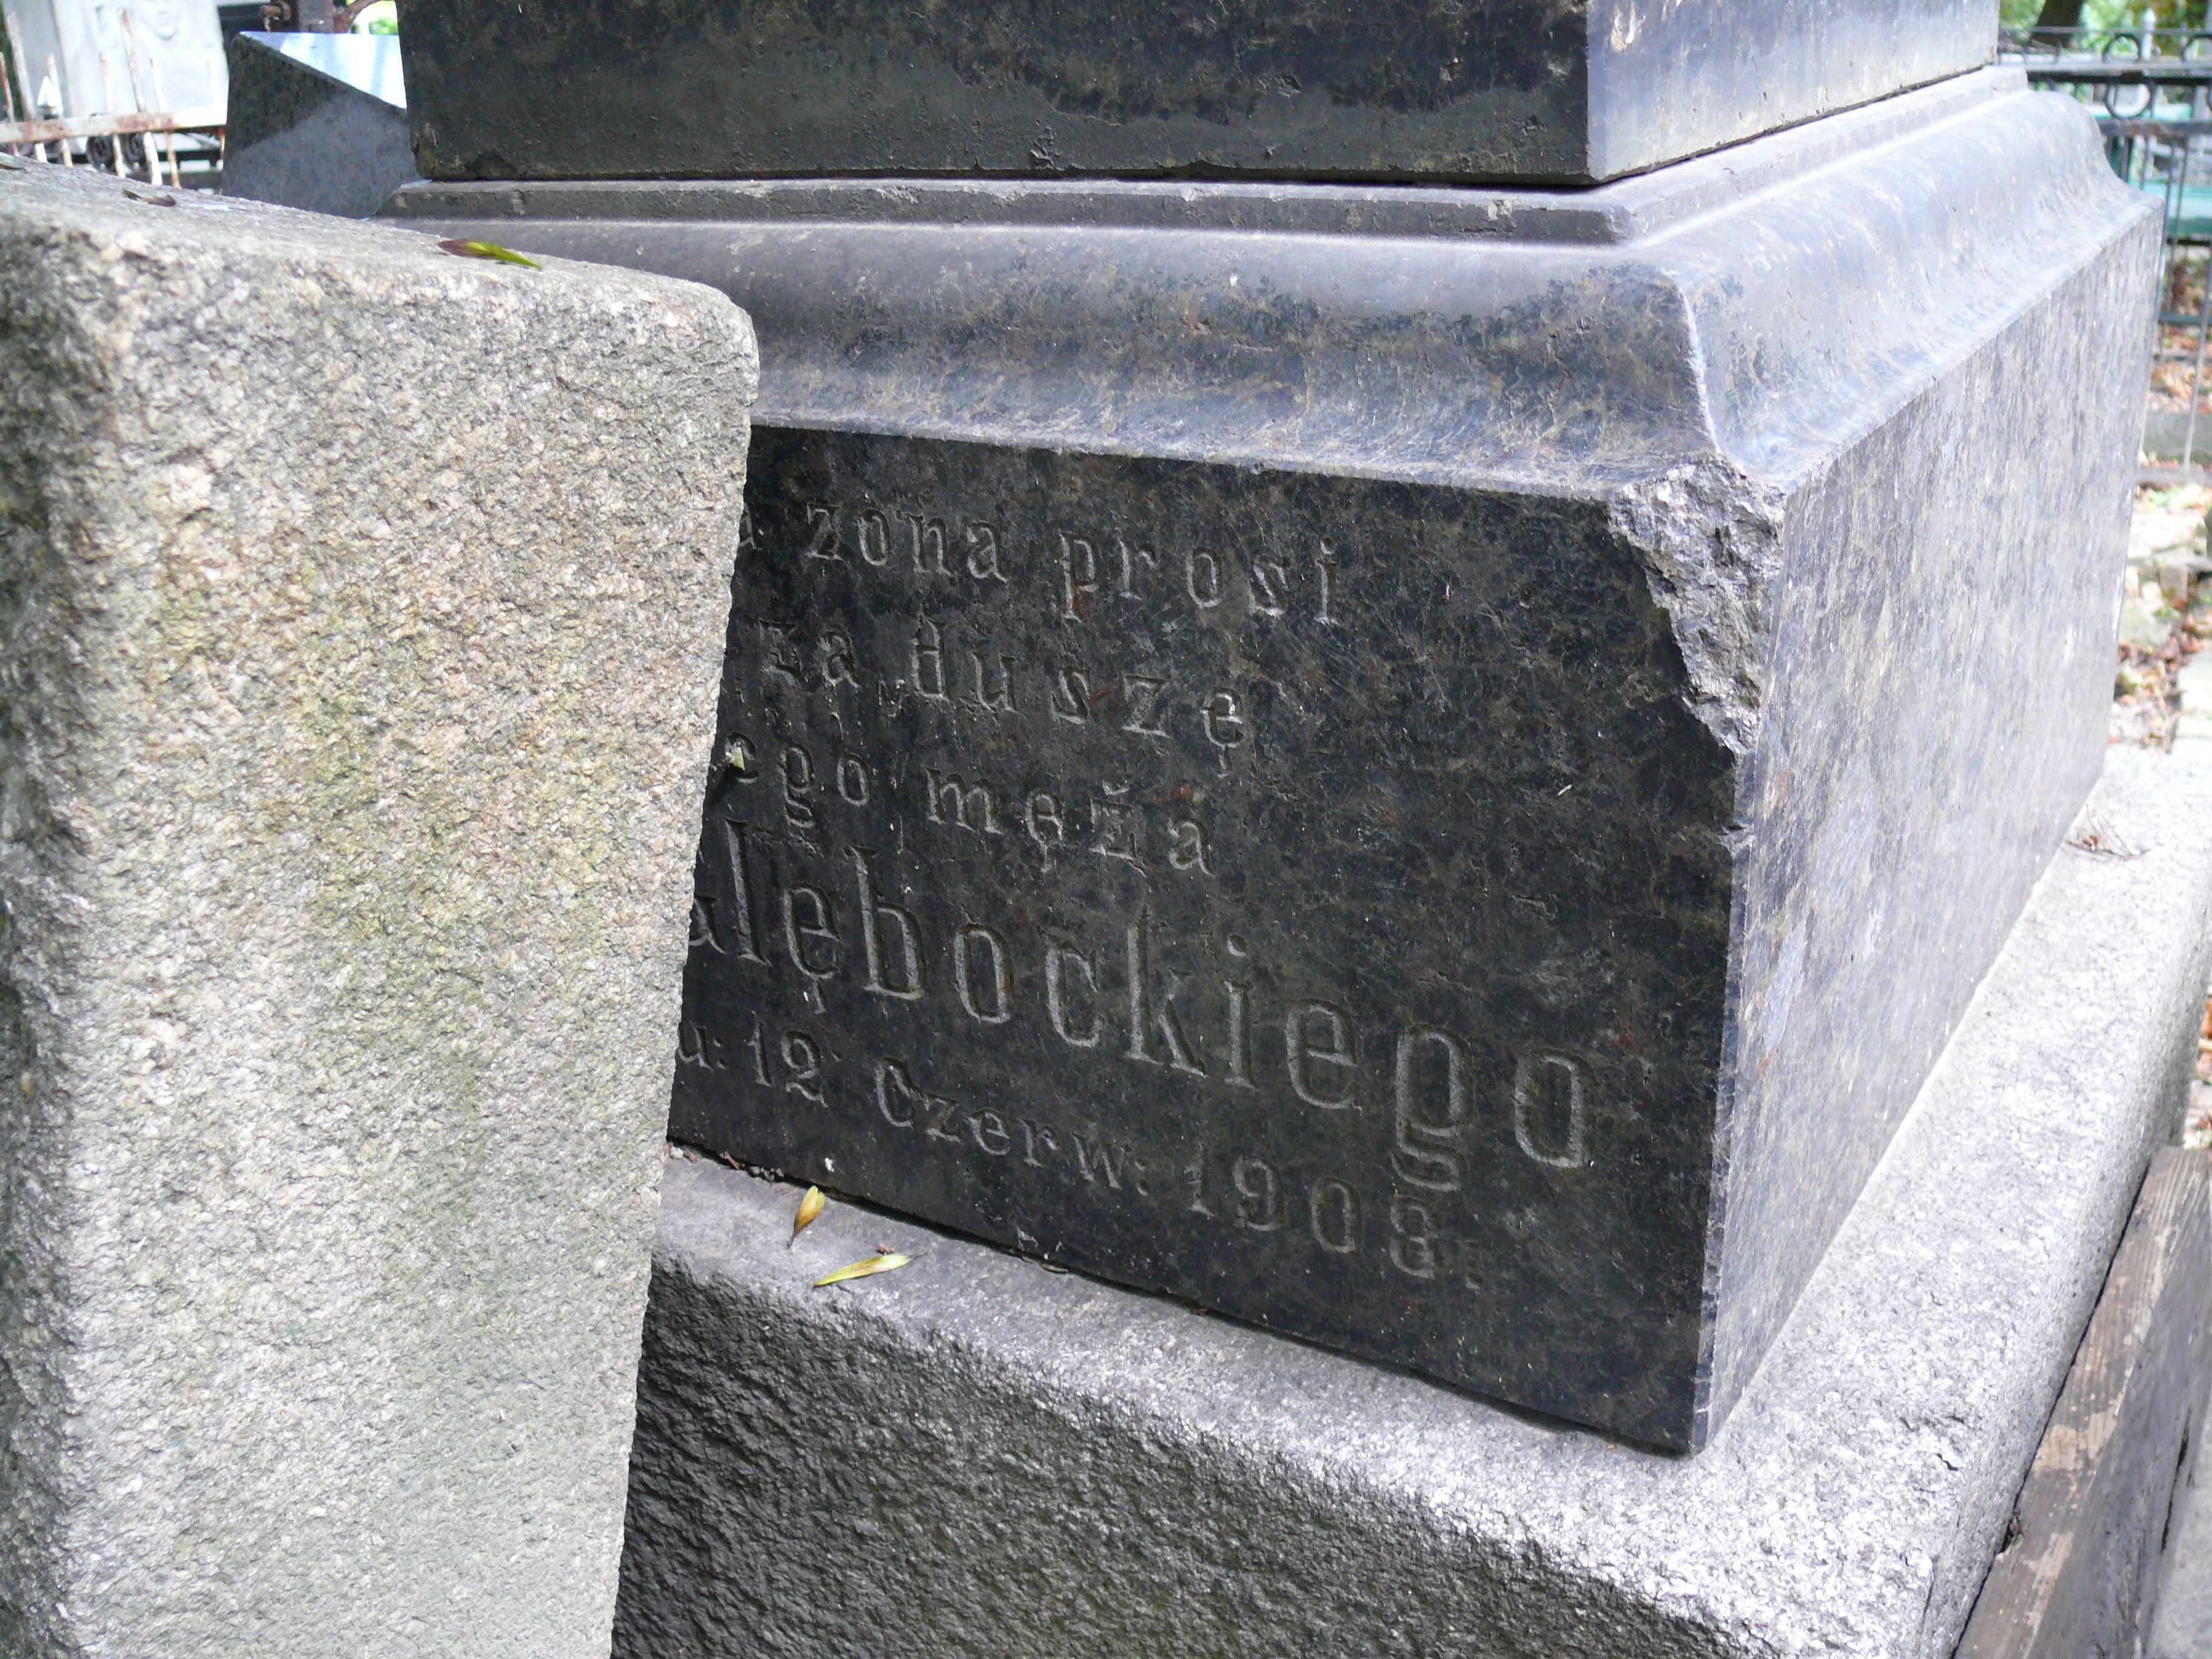 Inscription from the tombstone of N.N. Glebocki